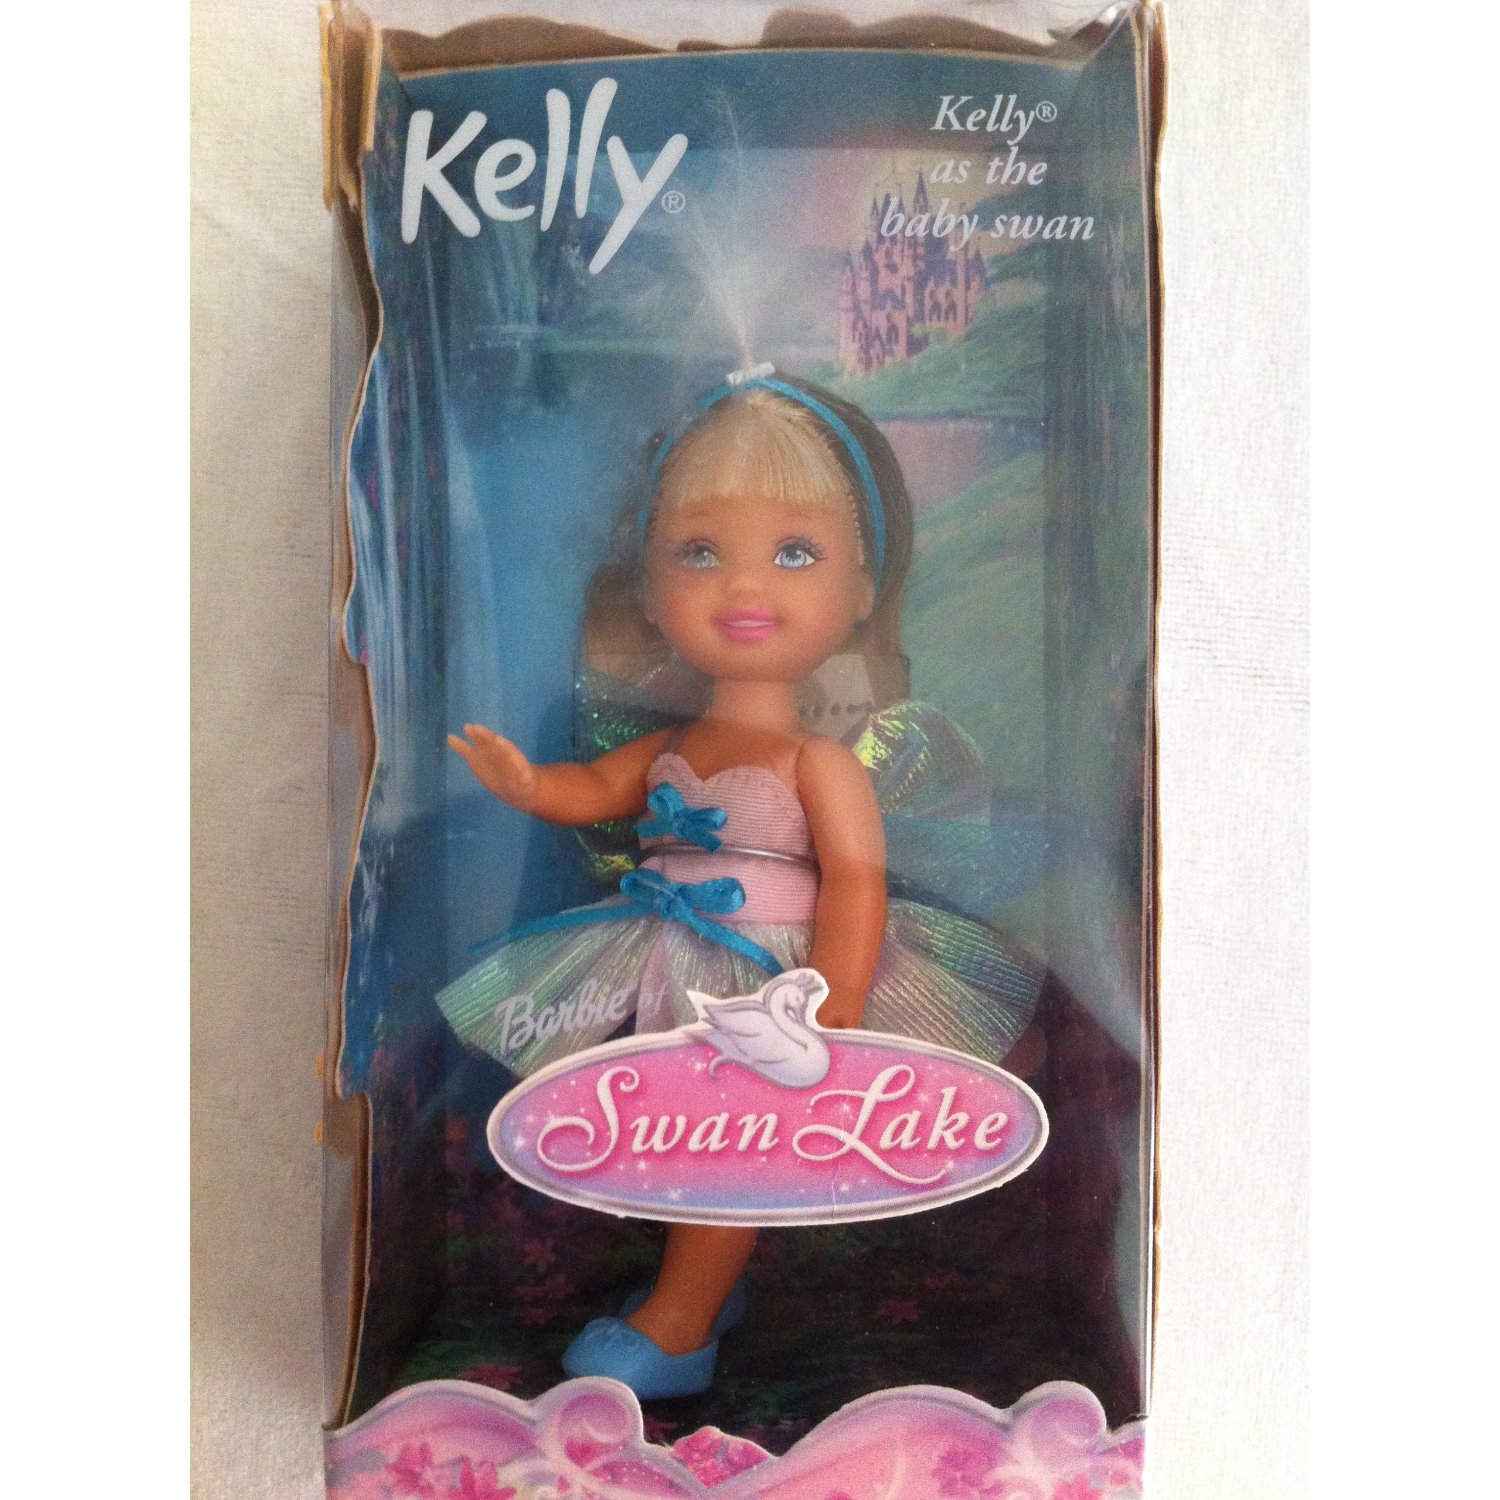 Kelly/Baby Swan Lake doll - Barbie of Swan Lake Photo (32877868 